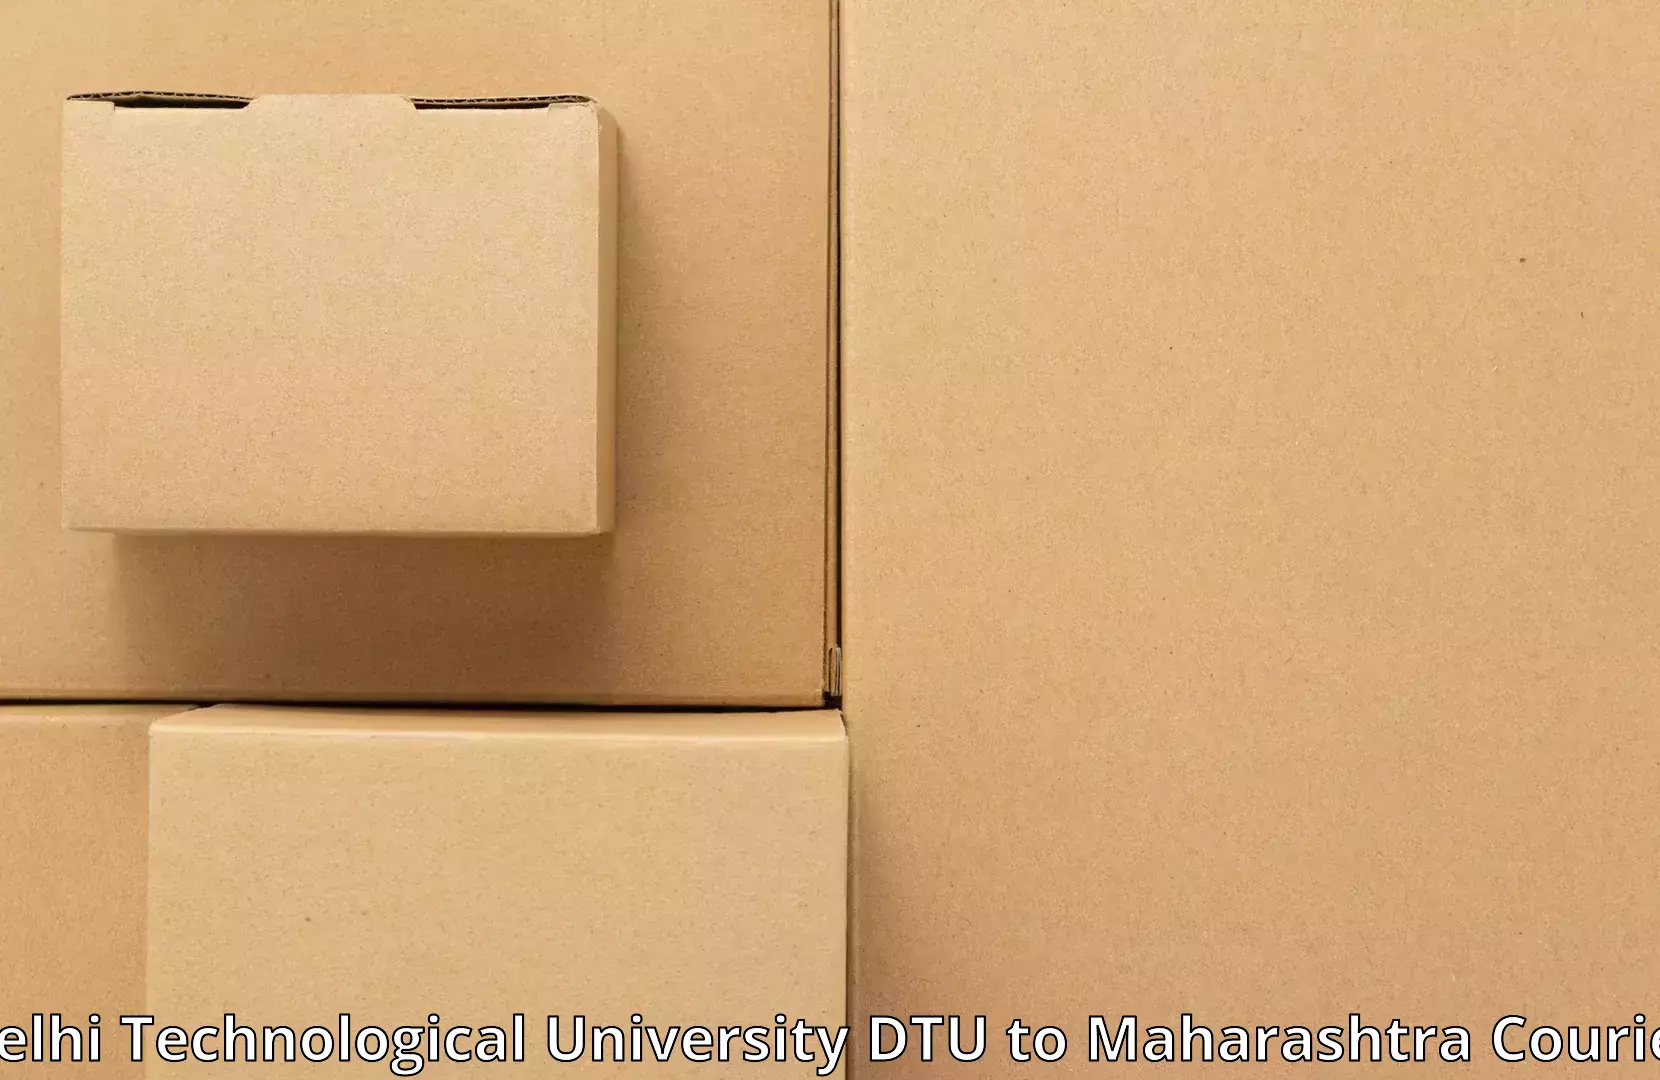 Household goods transporters Delhi Technological University DTU to Indapur